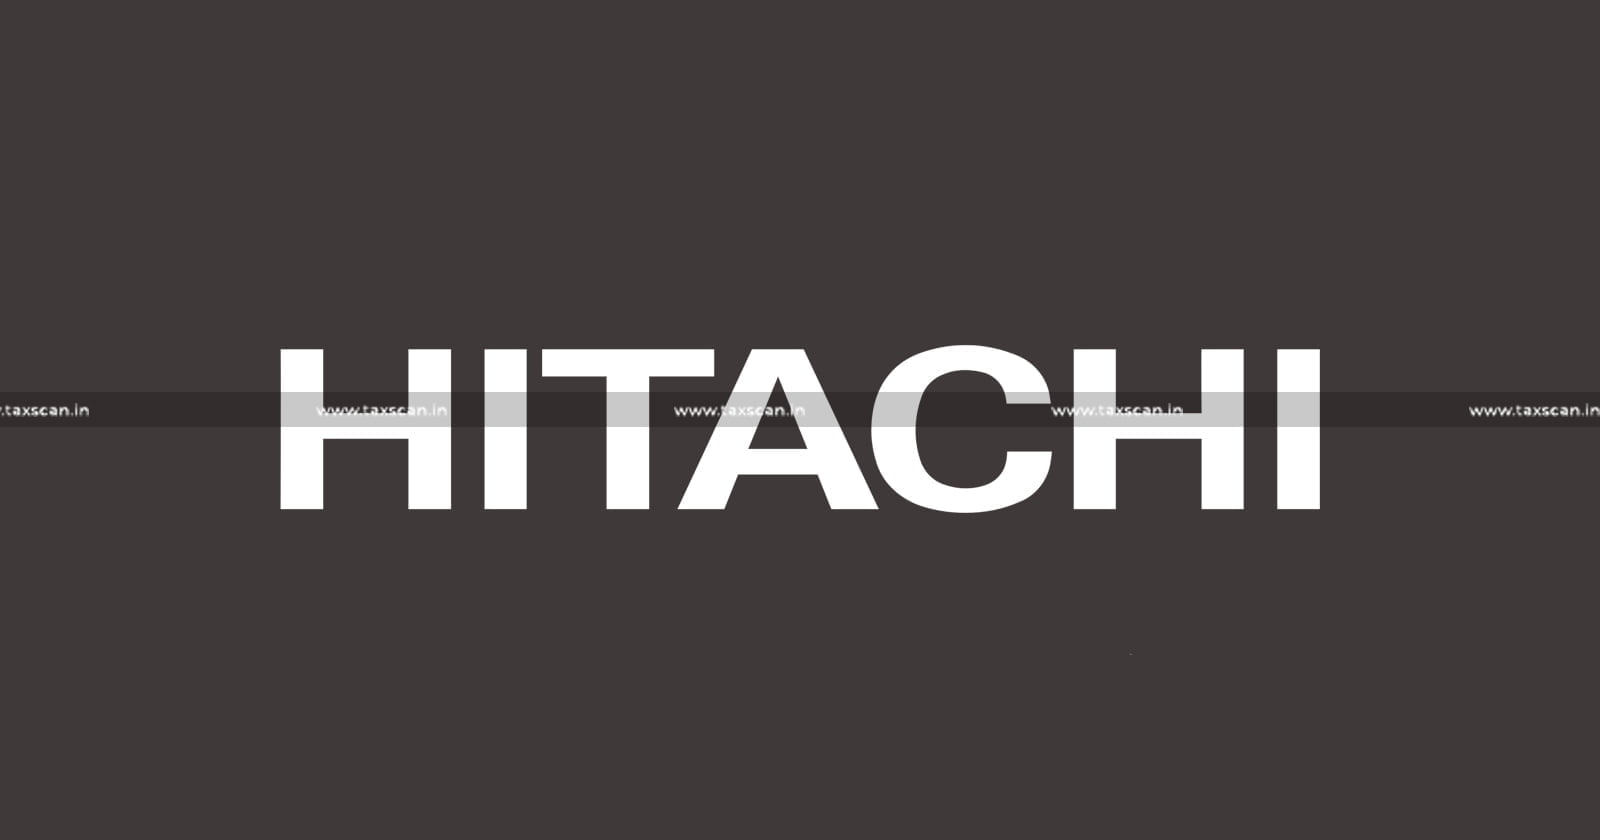 MBA Vacancy in Hitachi - CA Vacancy in Hitachi - Jobscan - taxscan